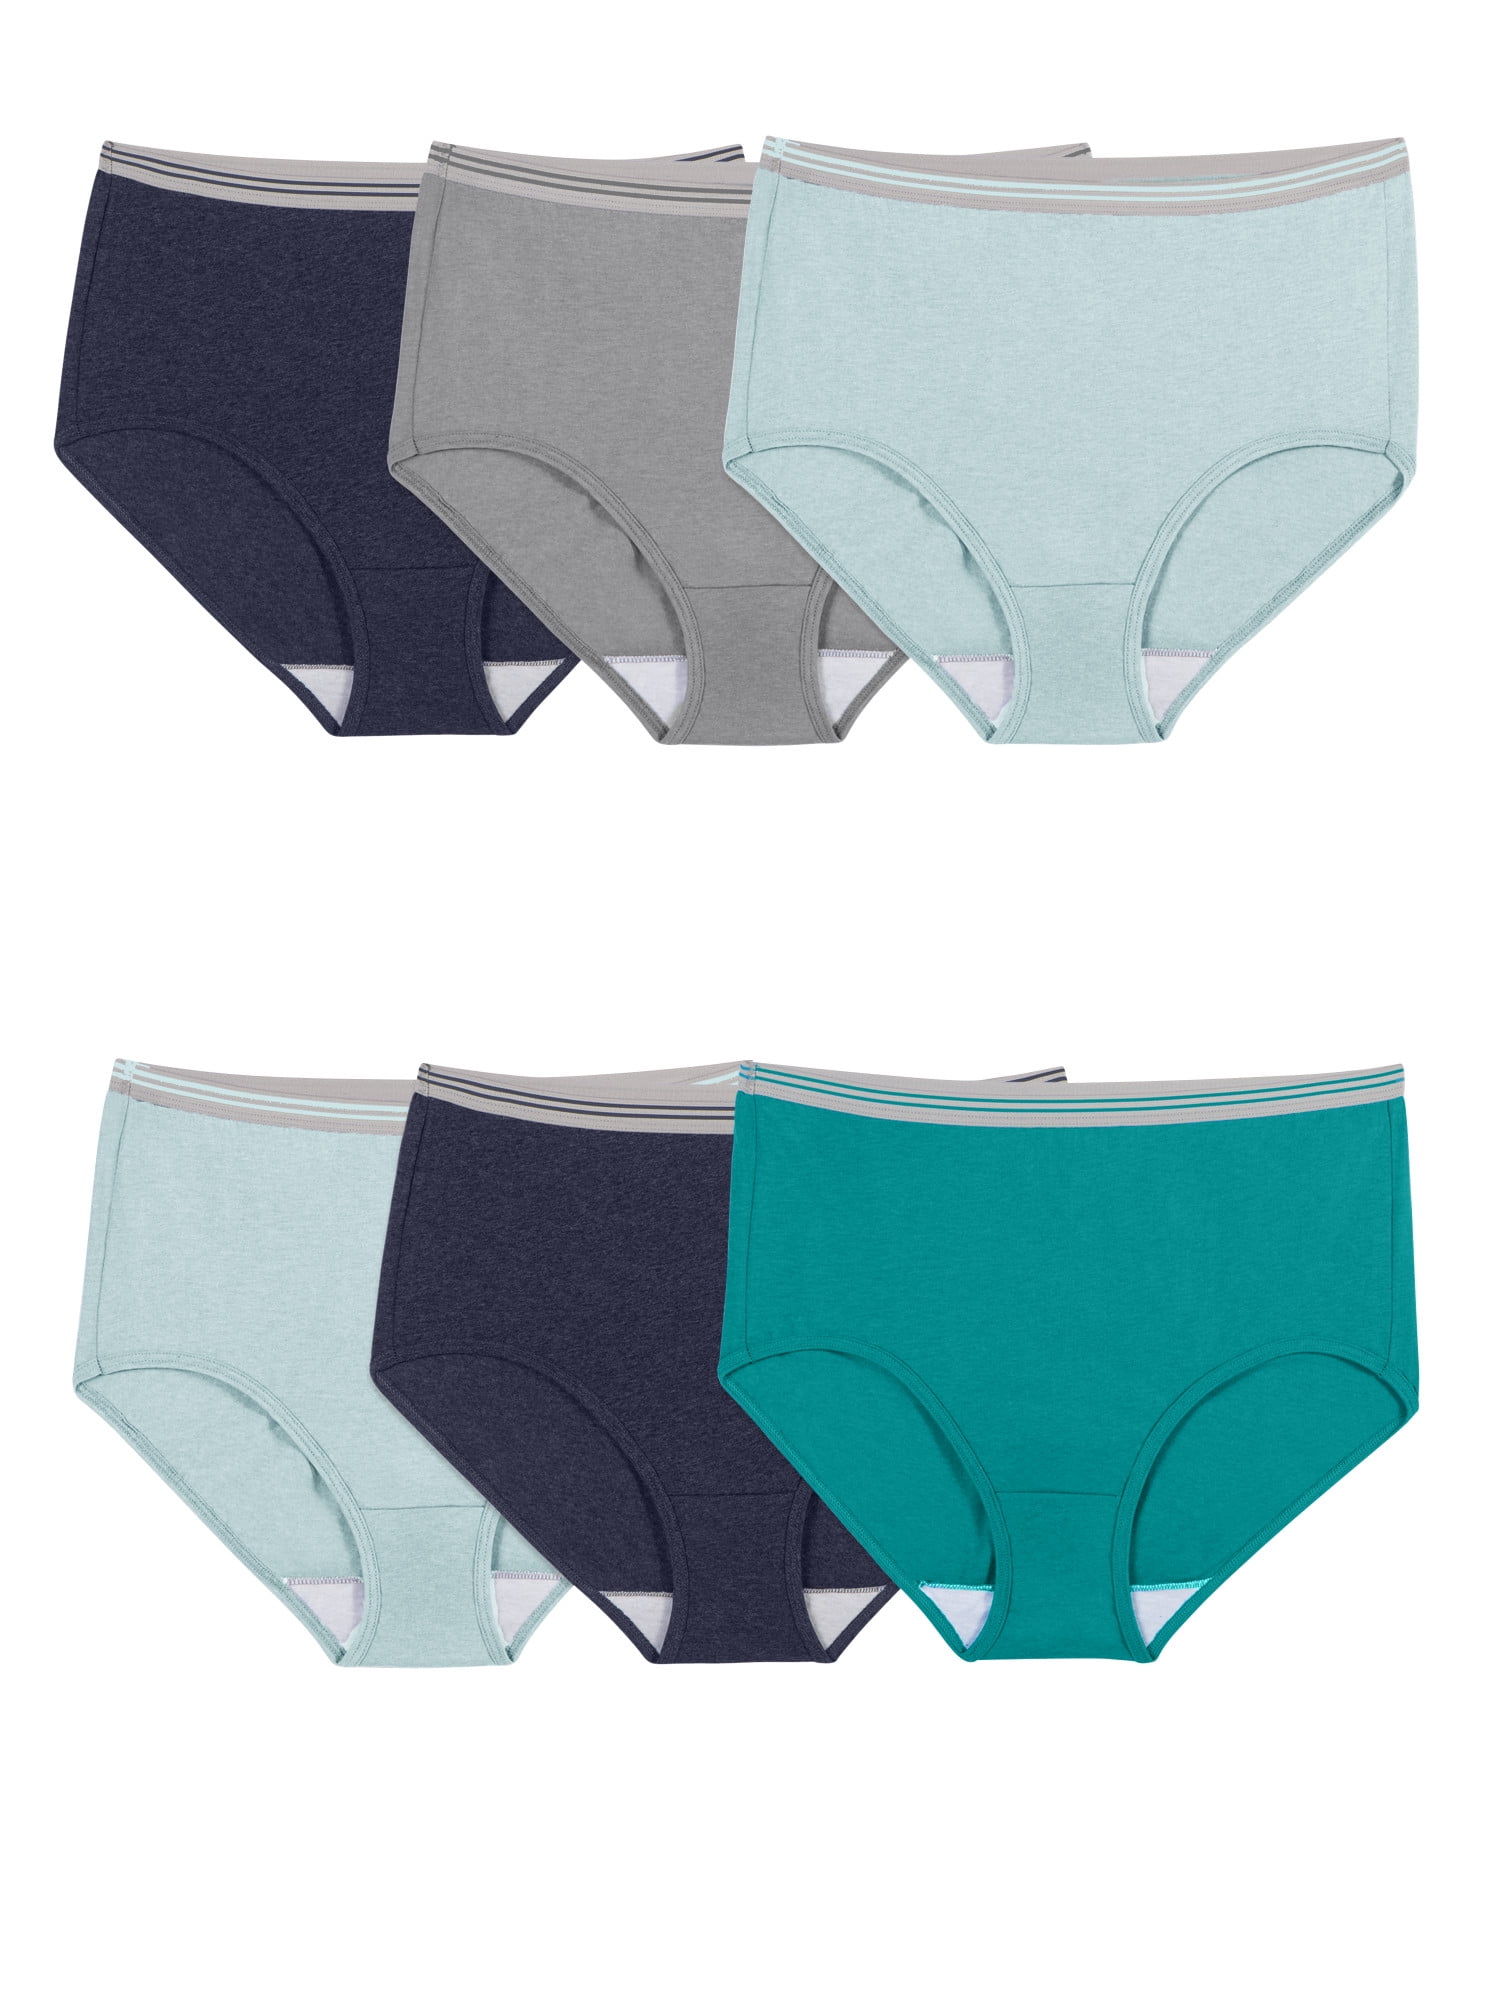 Joyspun Women's Cotton Hi Cut Bikini Panties, 6-Pack, Sizes S to